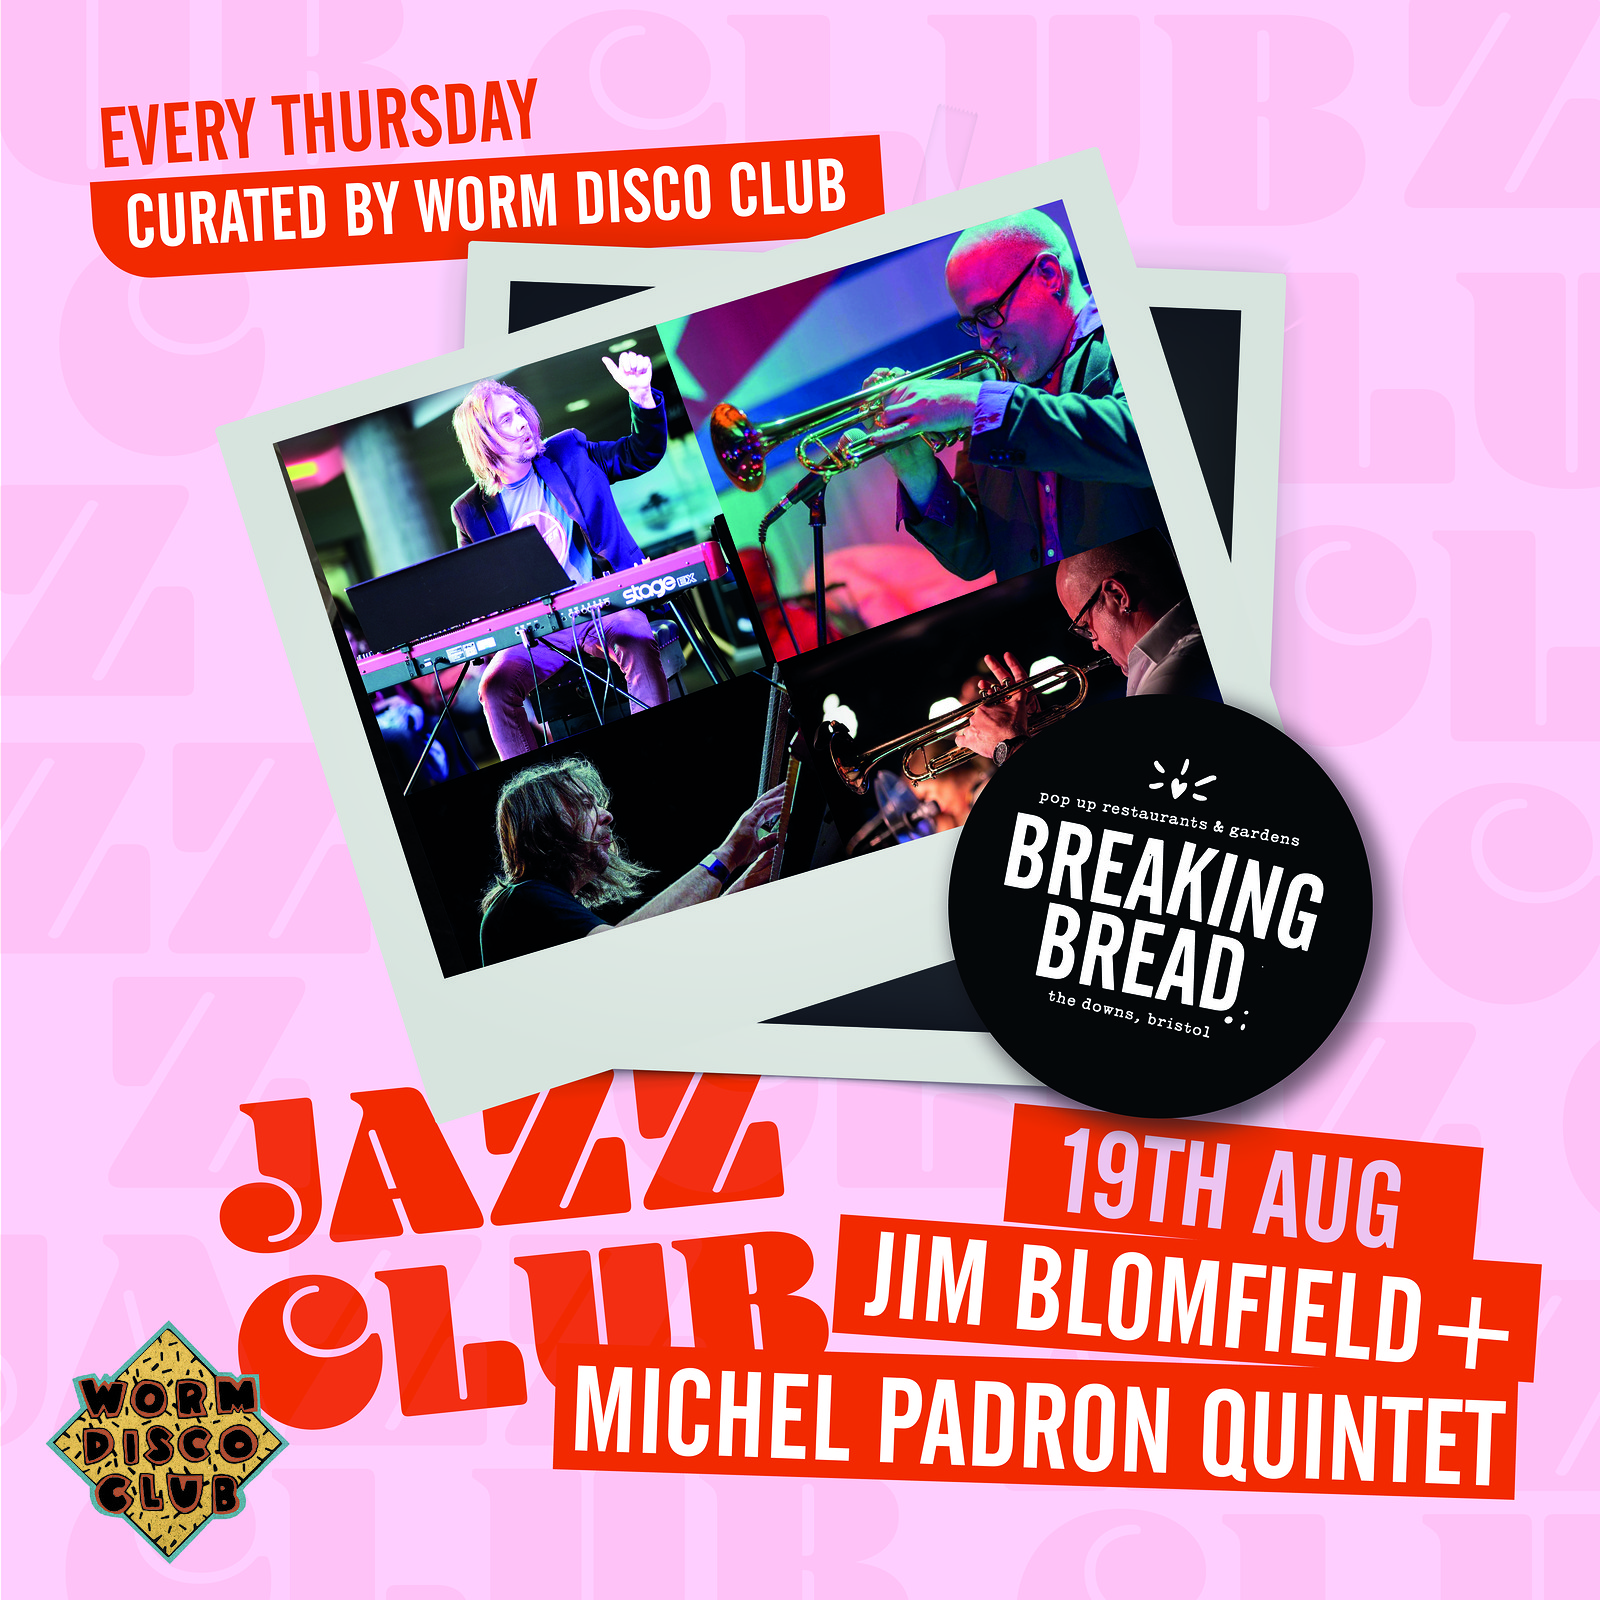 Jim Blomfield+Michel Padrón Quintet at Breaking Bread